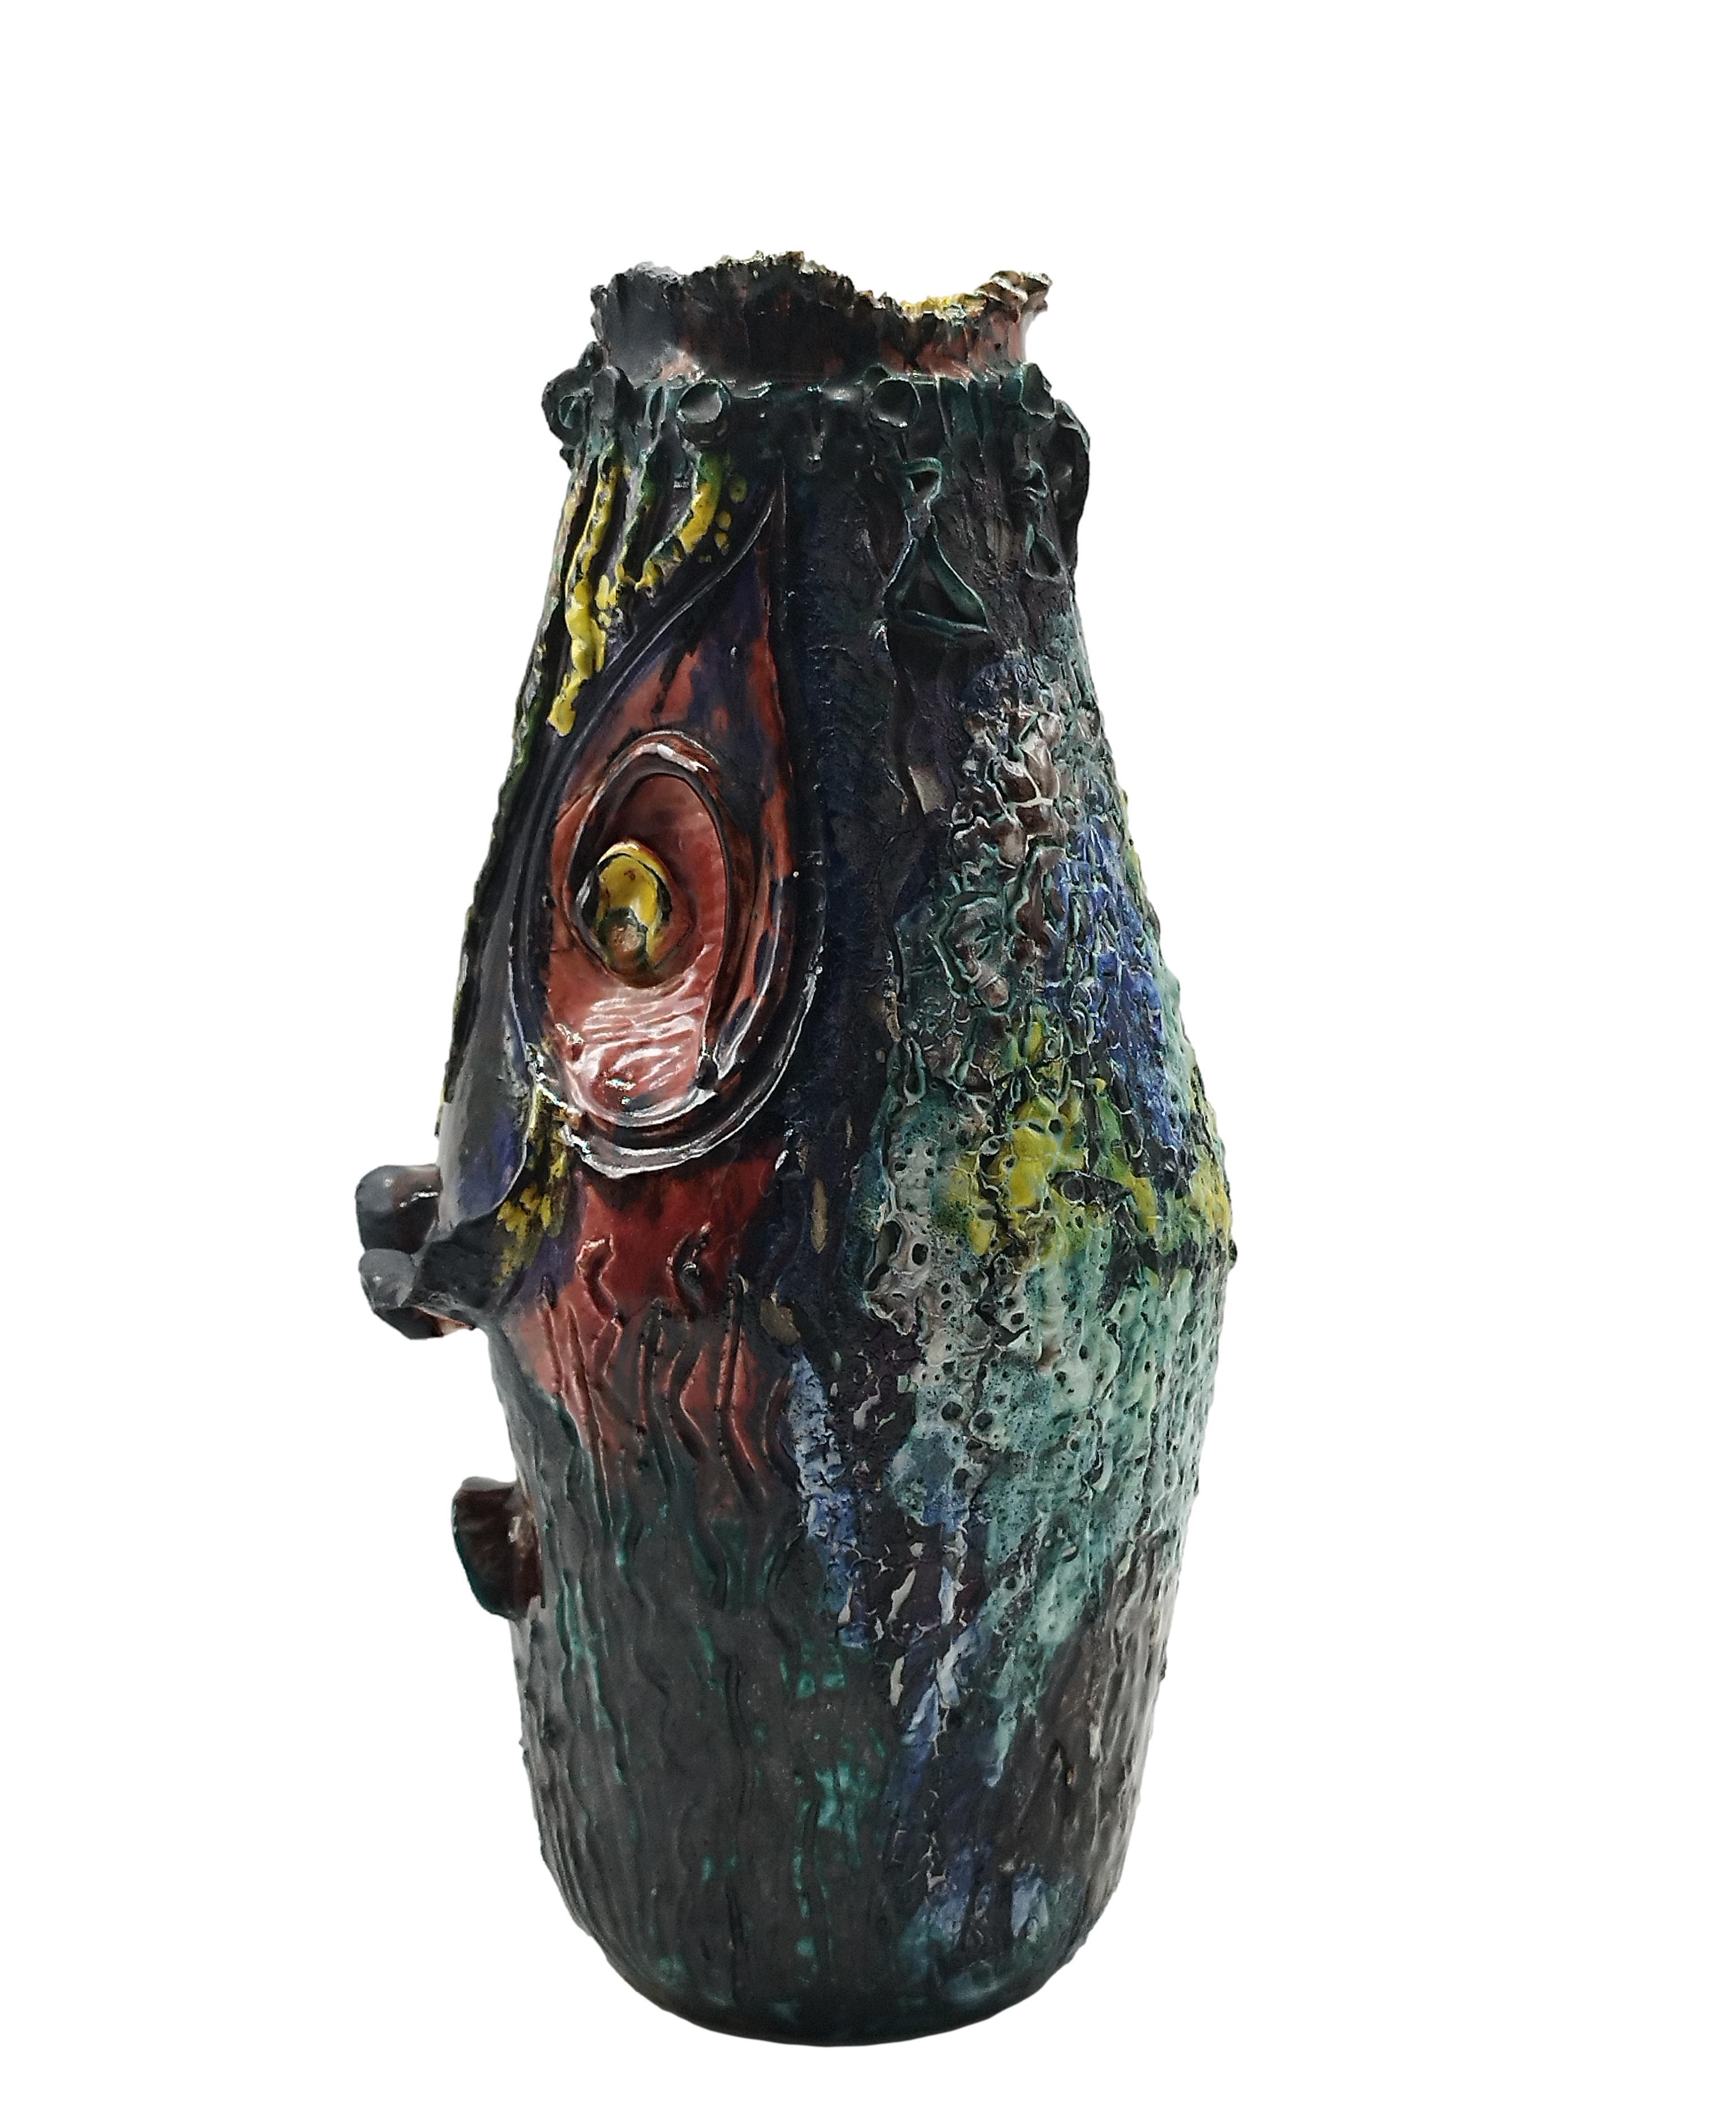 Rare ceramic vase made by Ascoli Piceno's Fama ceramic and majolica factory 